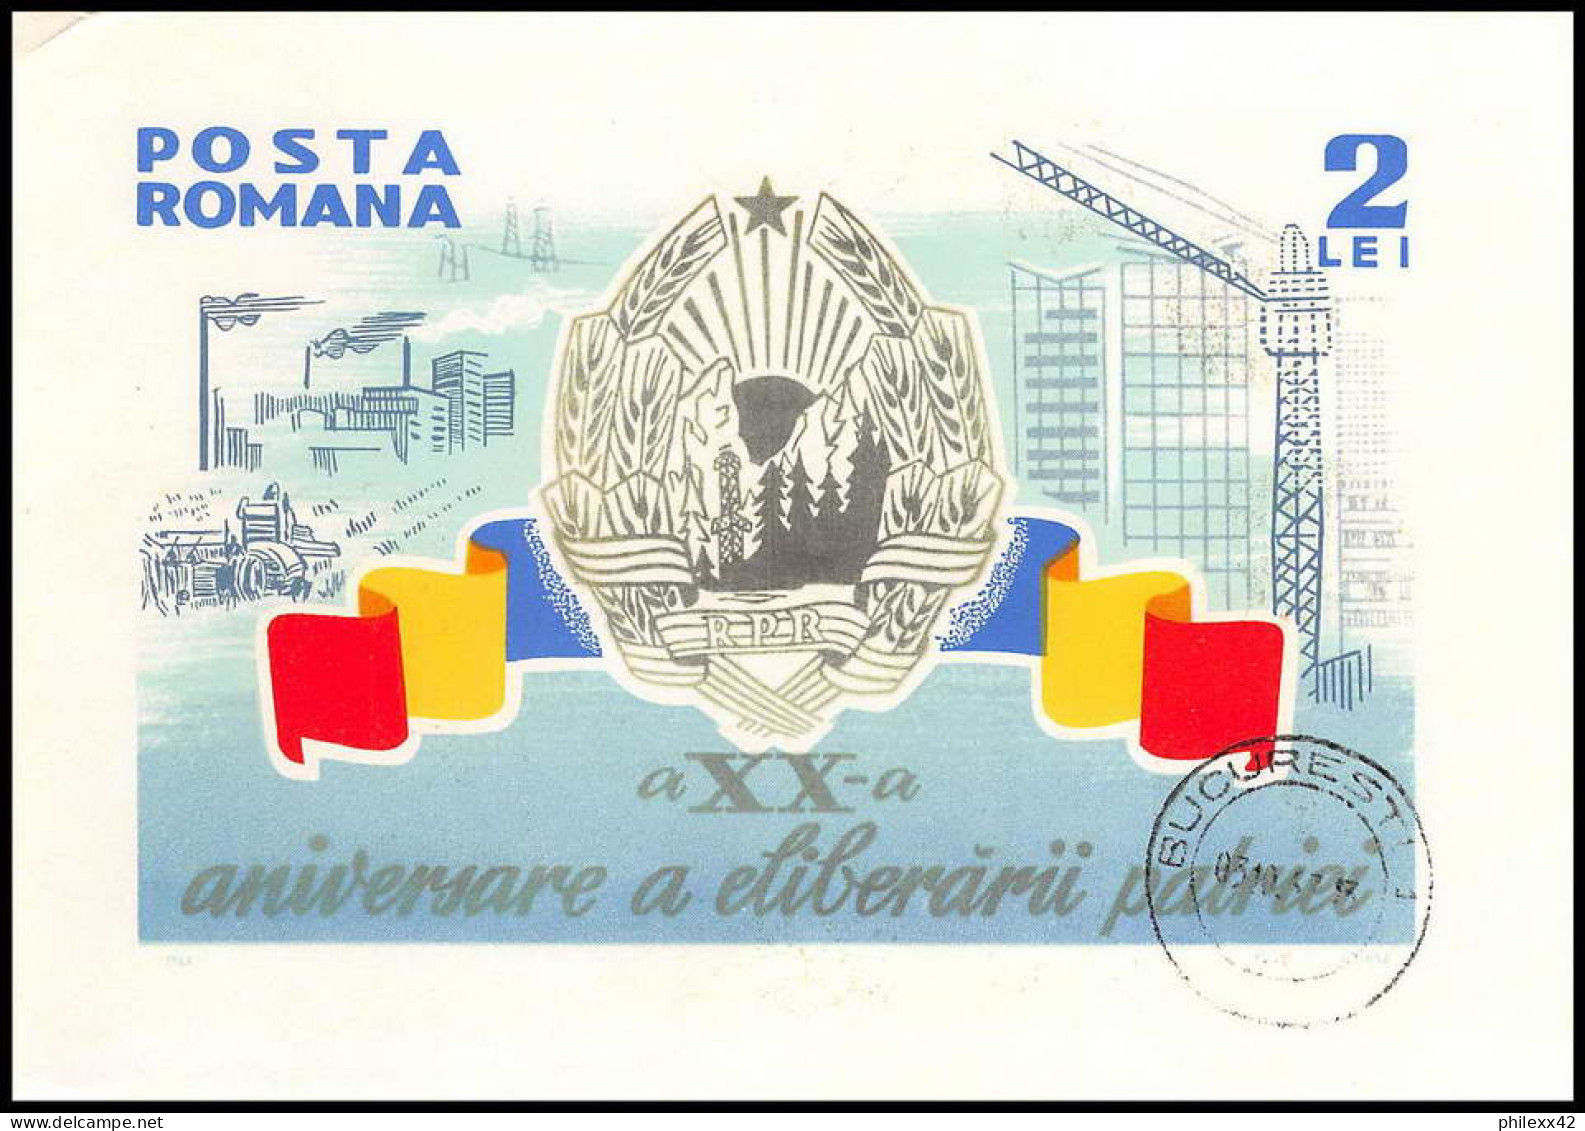 Roumanie (Romania) 133 - mint & used collection de 14 blocs feuillets differents